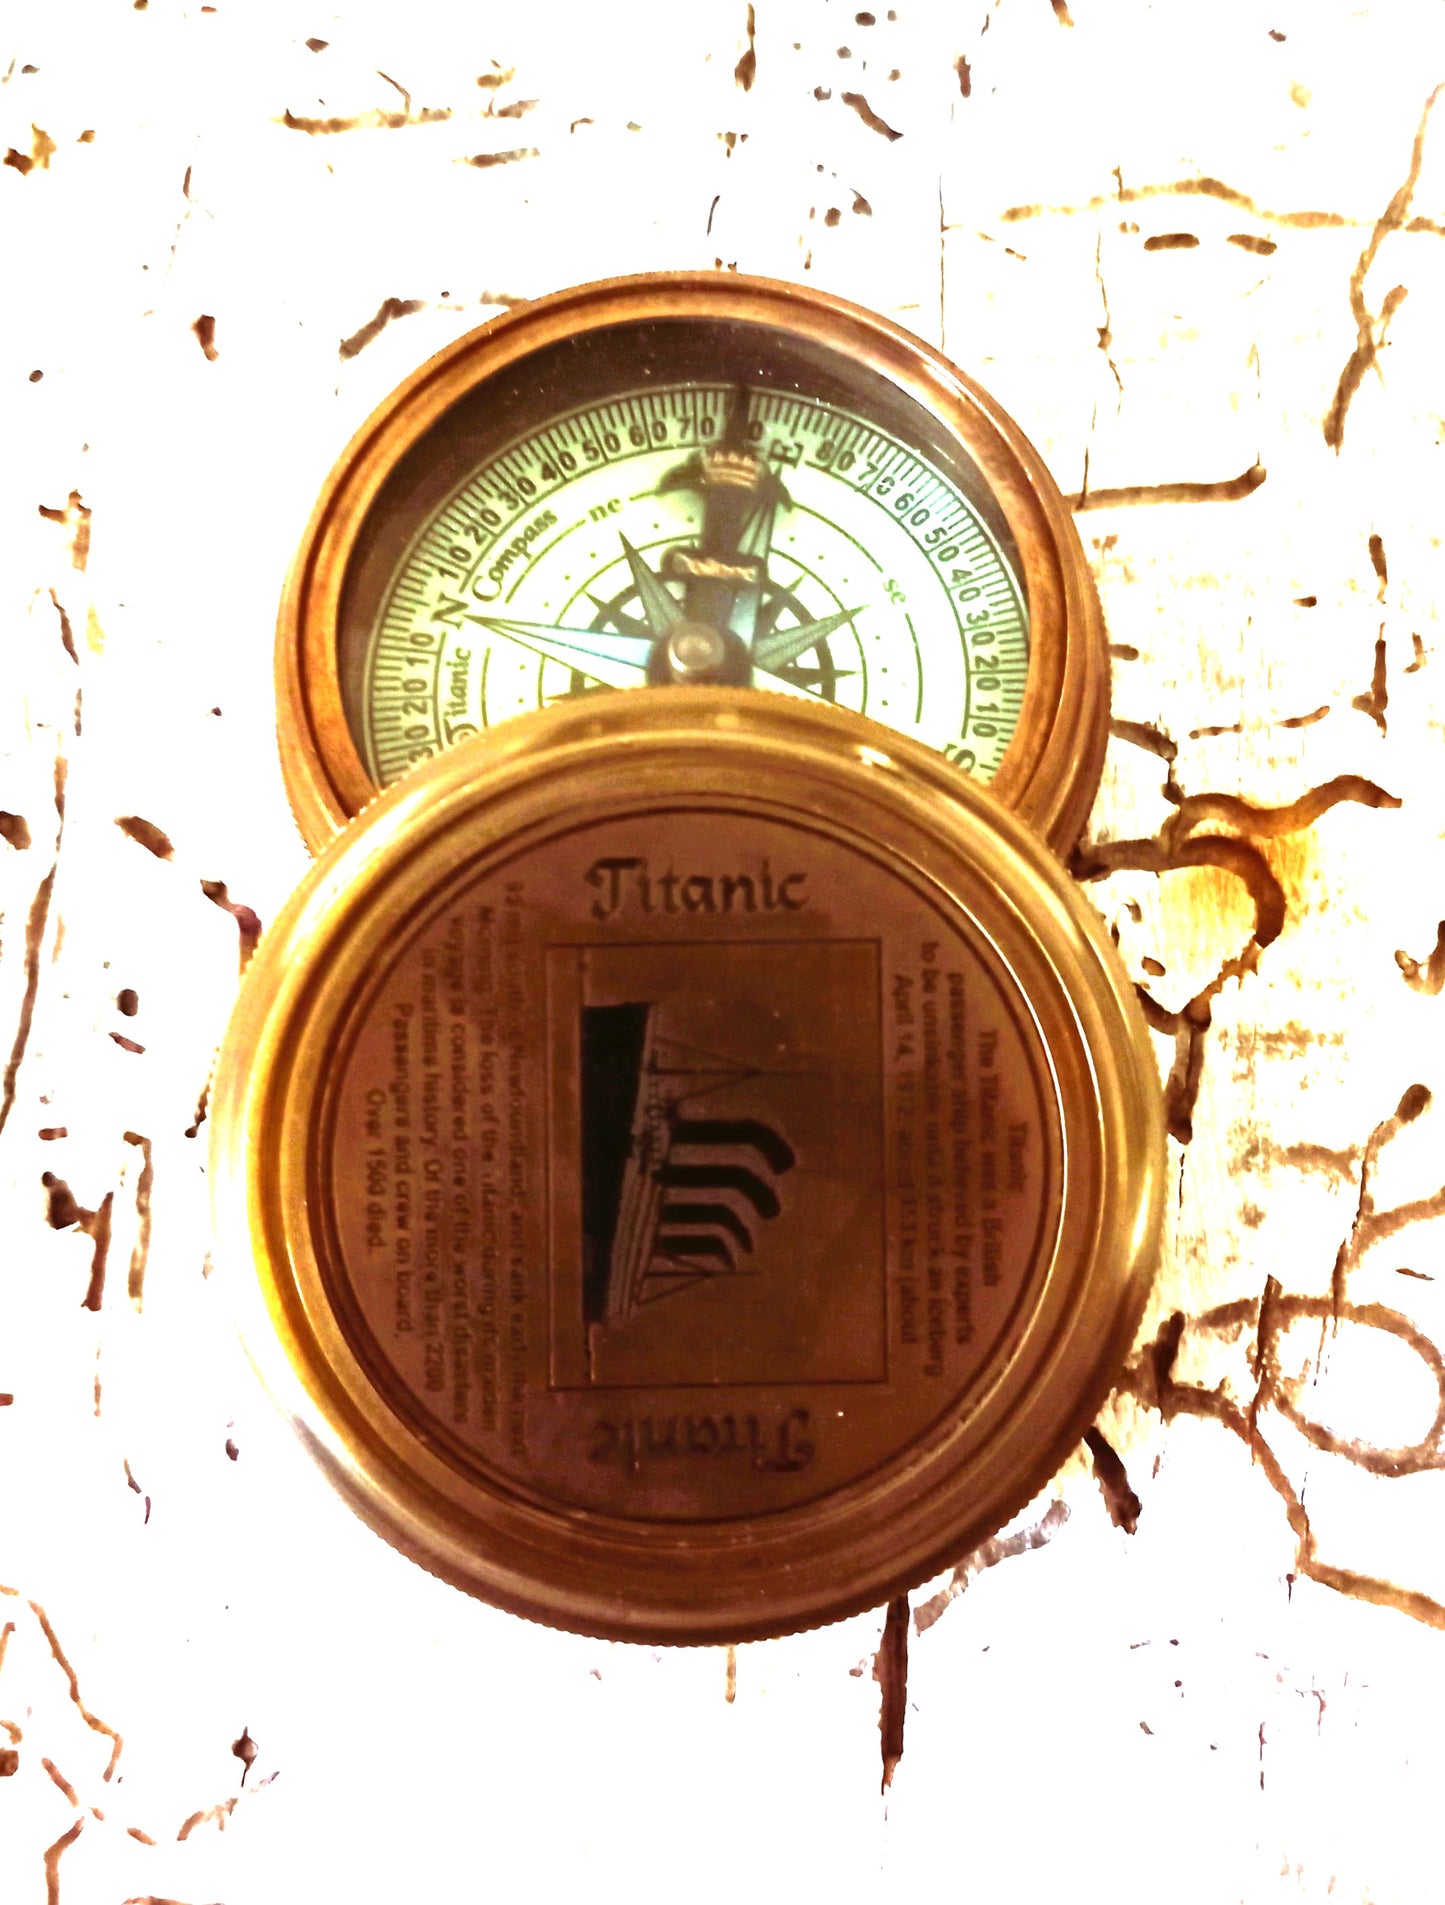 Taschen-Kompass Titanic